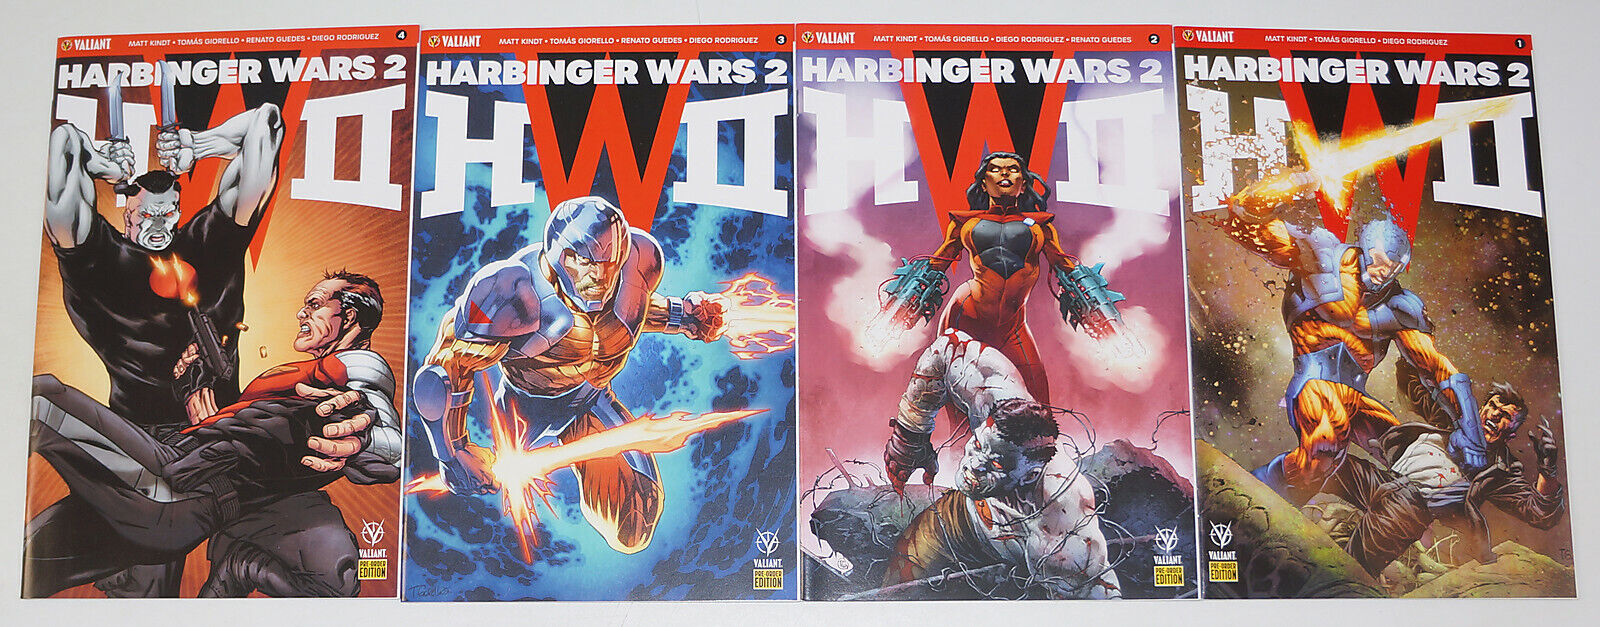 Harbinger Wars 2 #1-4 VF/NM complete series - all pre-order variants valiant set